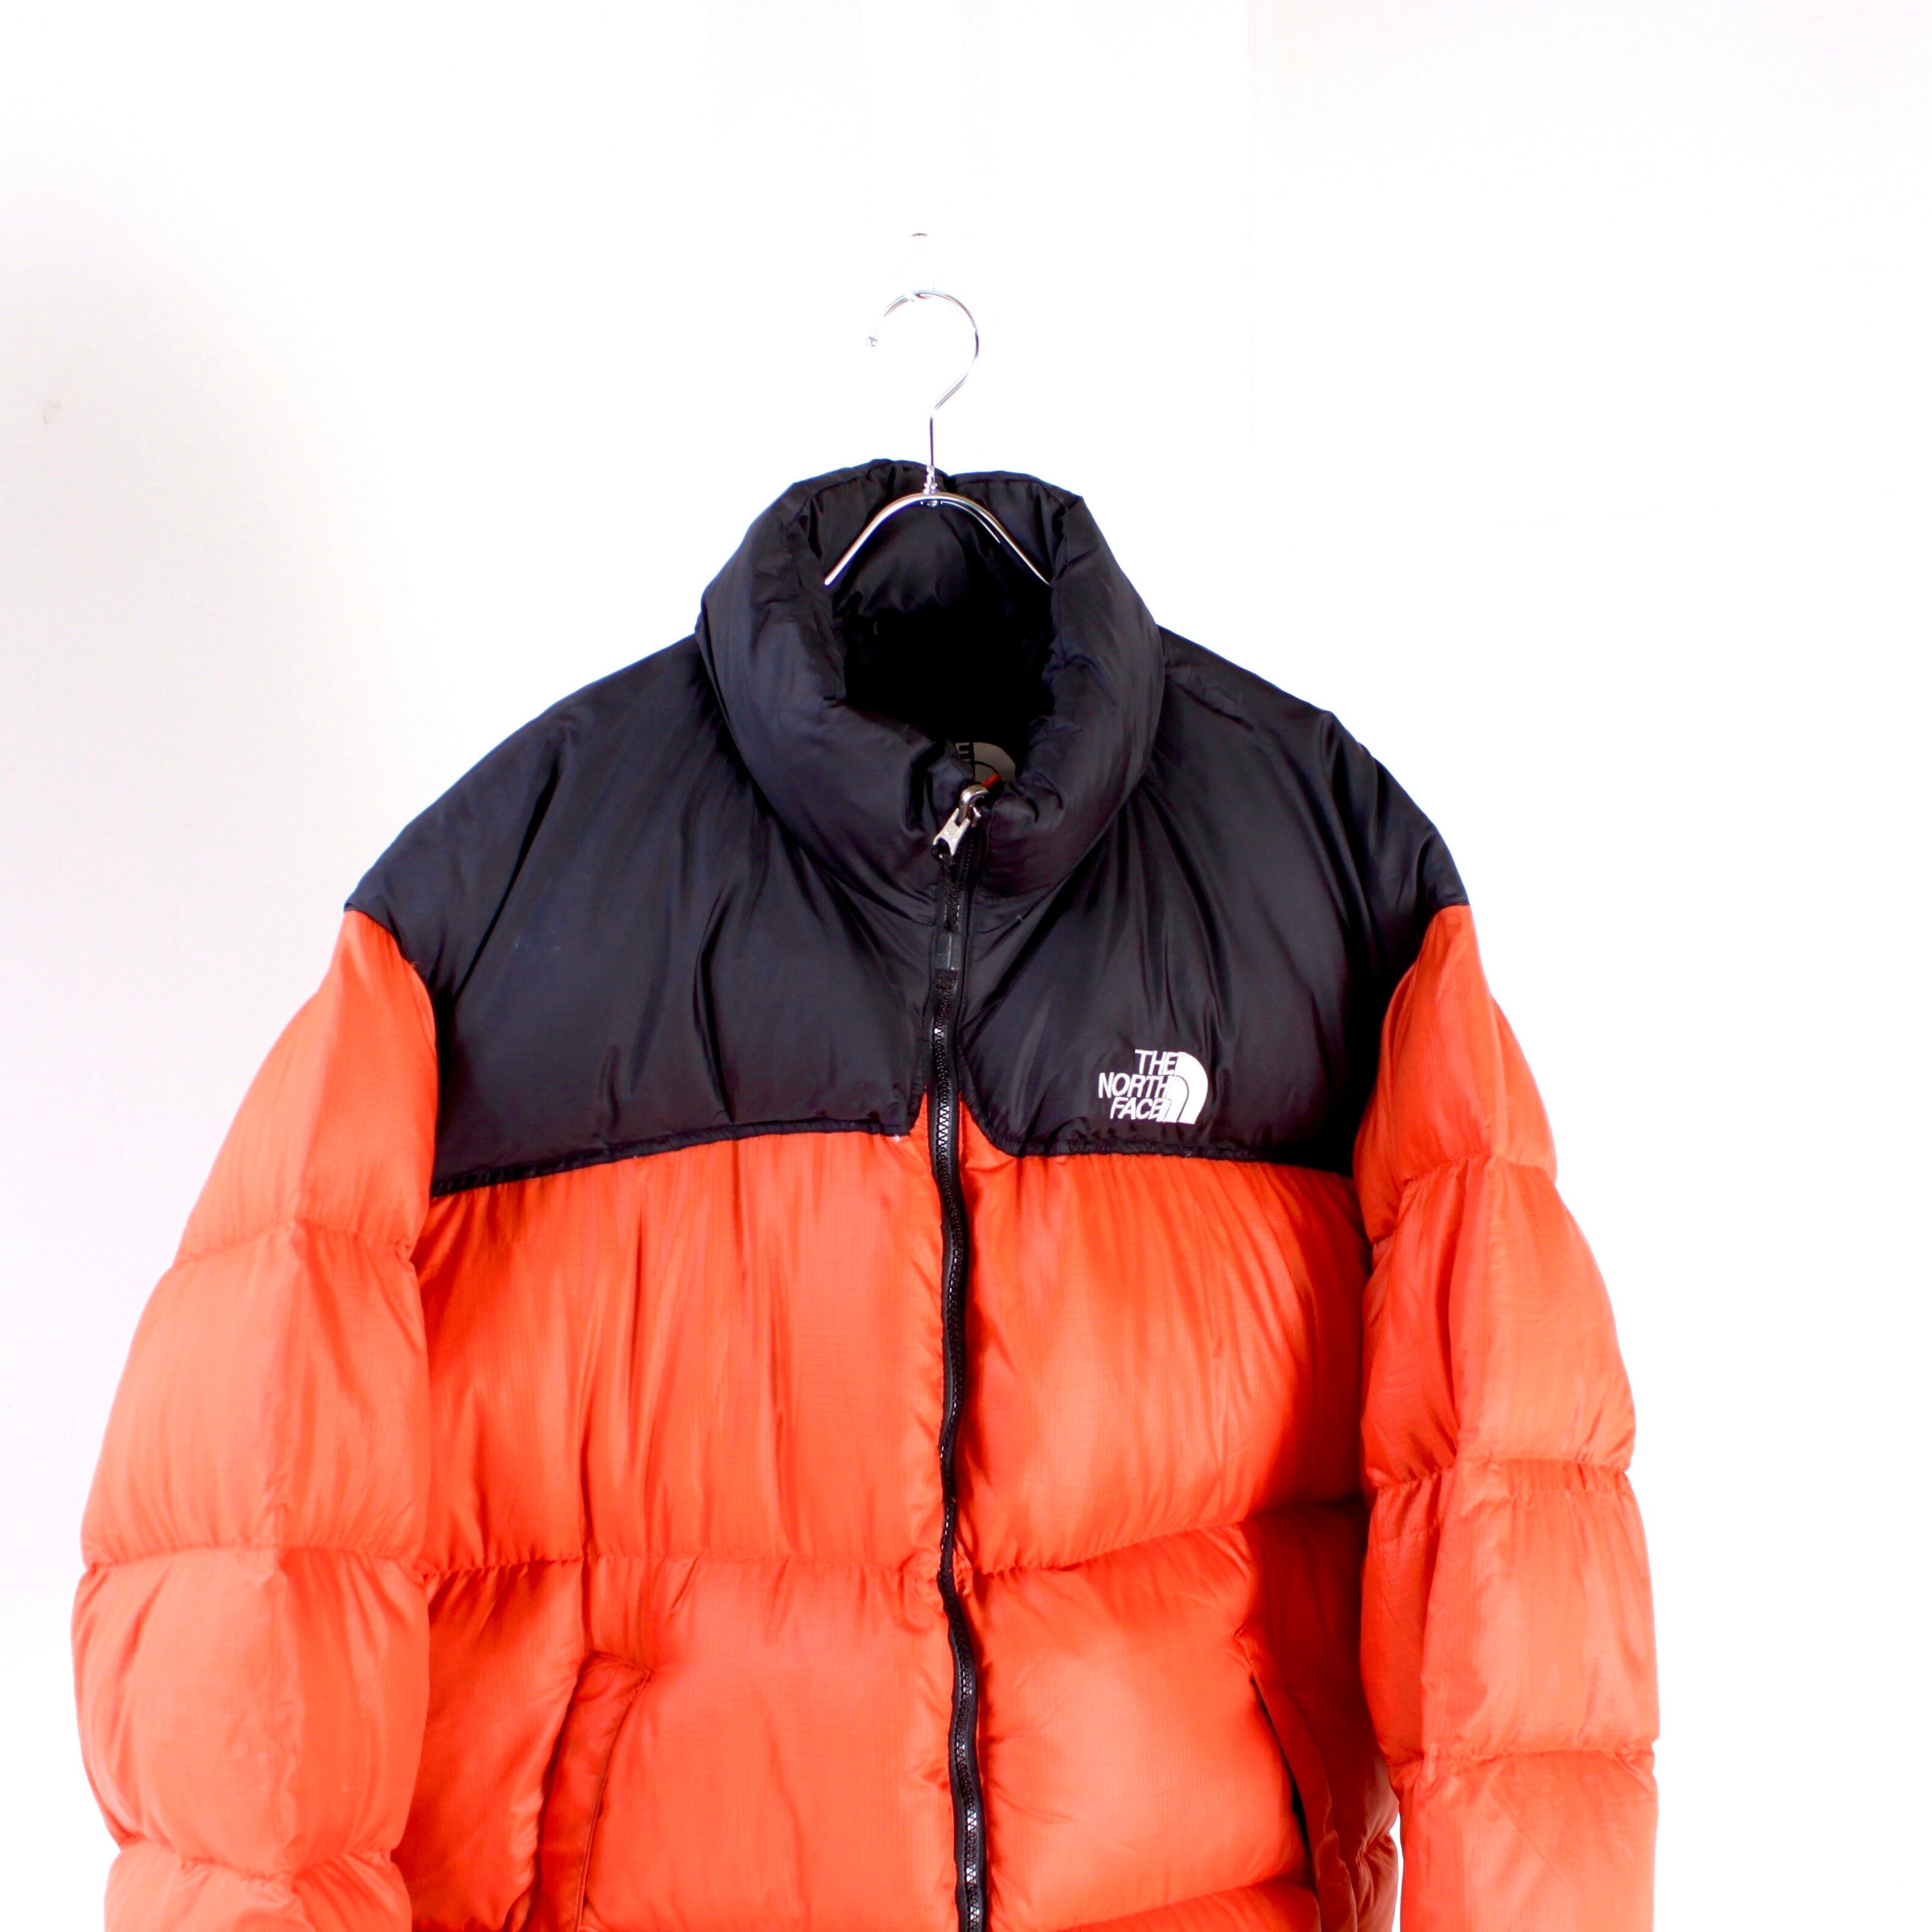 0445. 1990's the north face nuptse jacket persian orange xxlarge